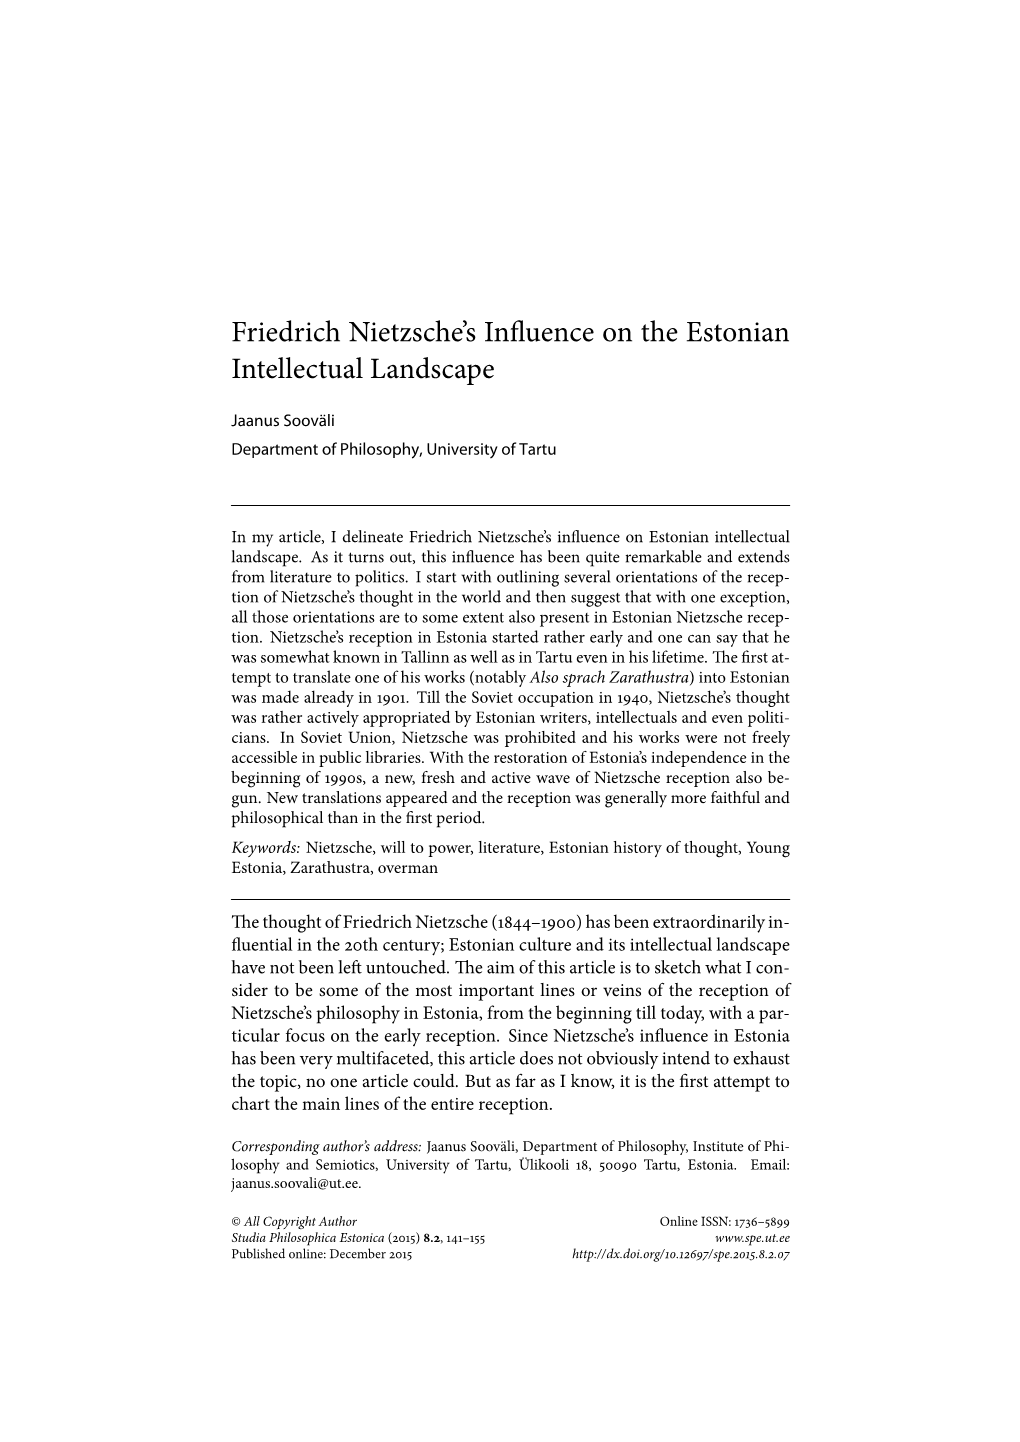 Friedrich Nietzsche's Influence on the Estonian Intellectual Landscape